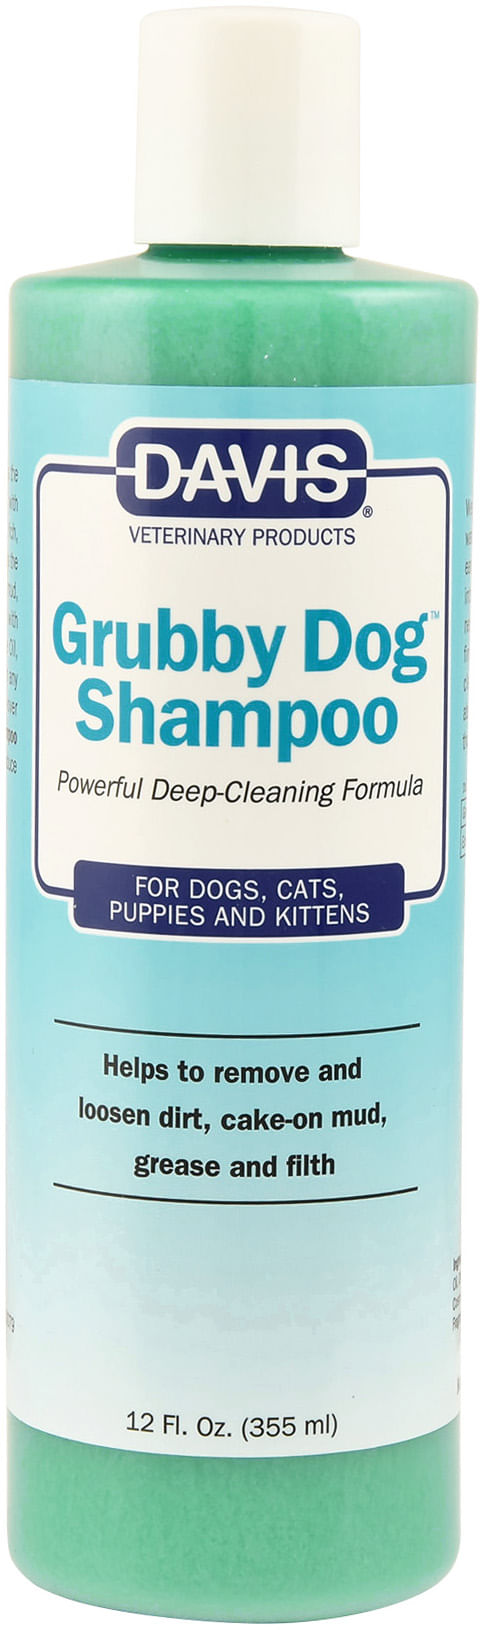 Grubby-Dog-Shampoo-12-oz-